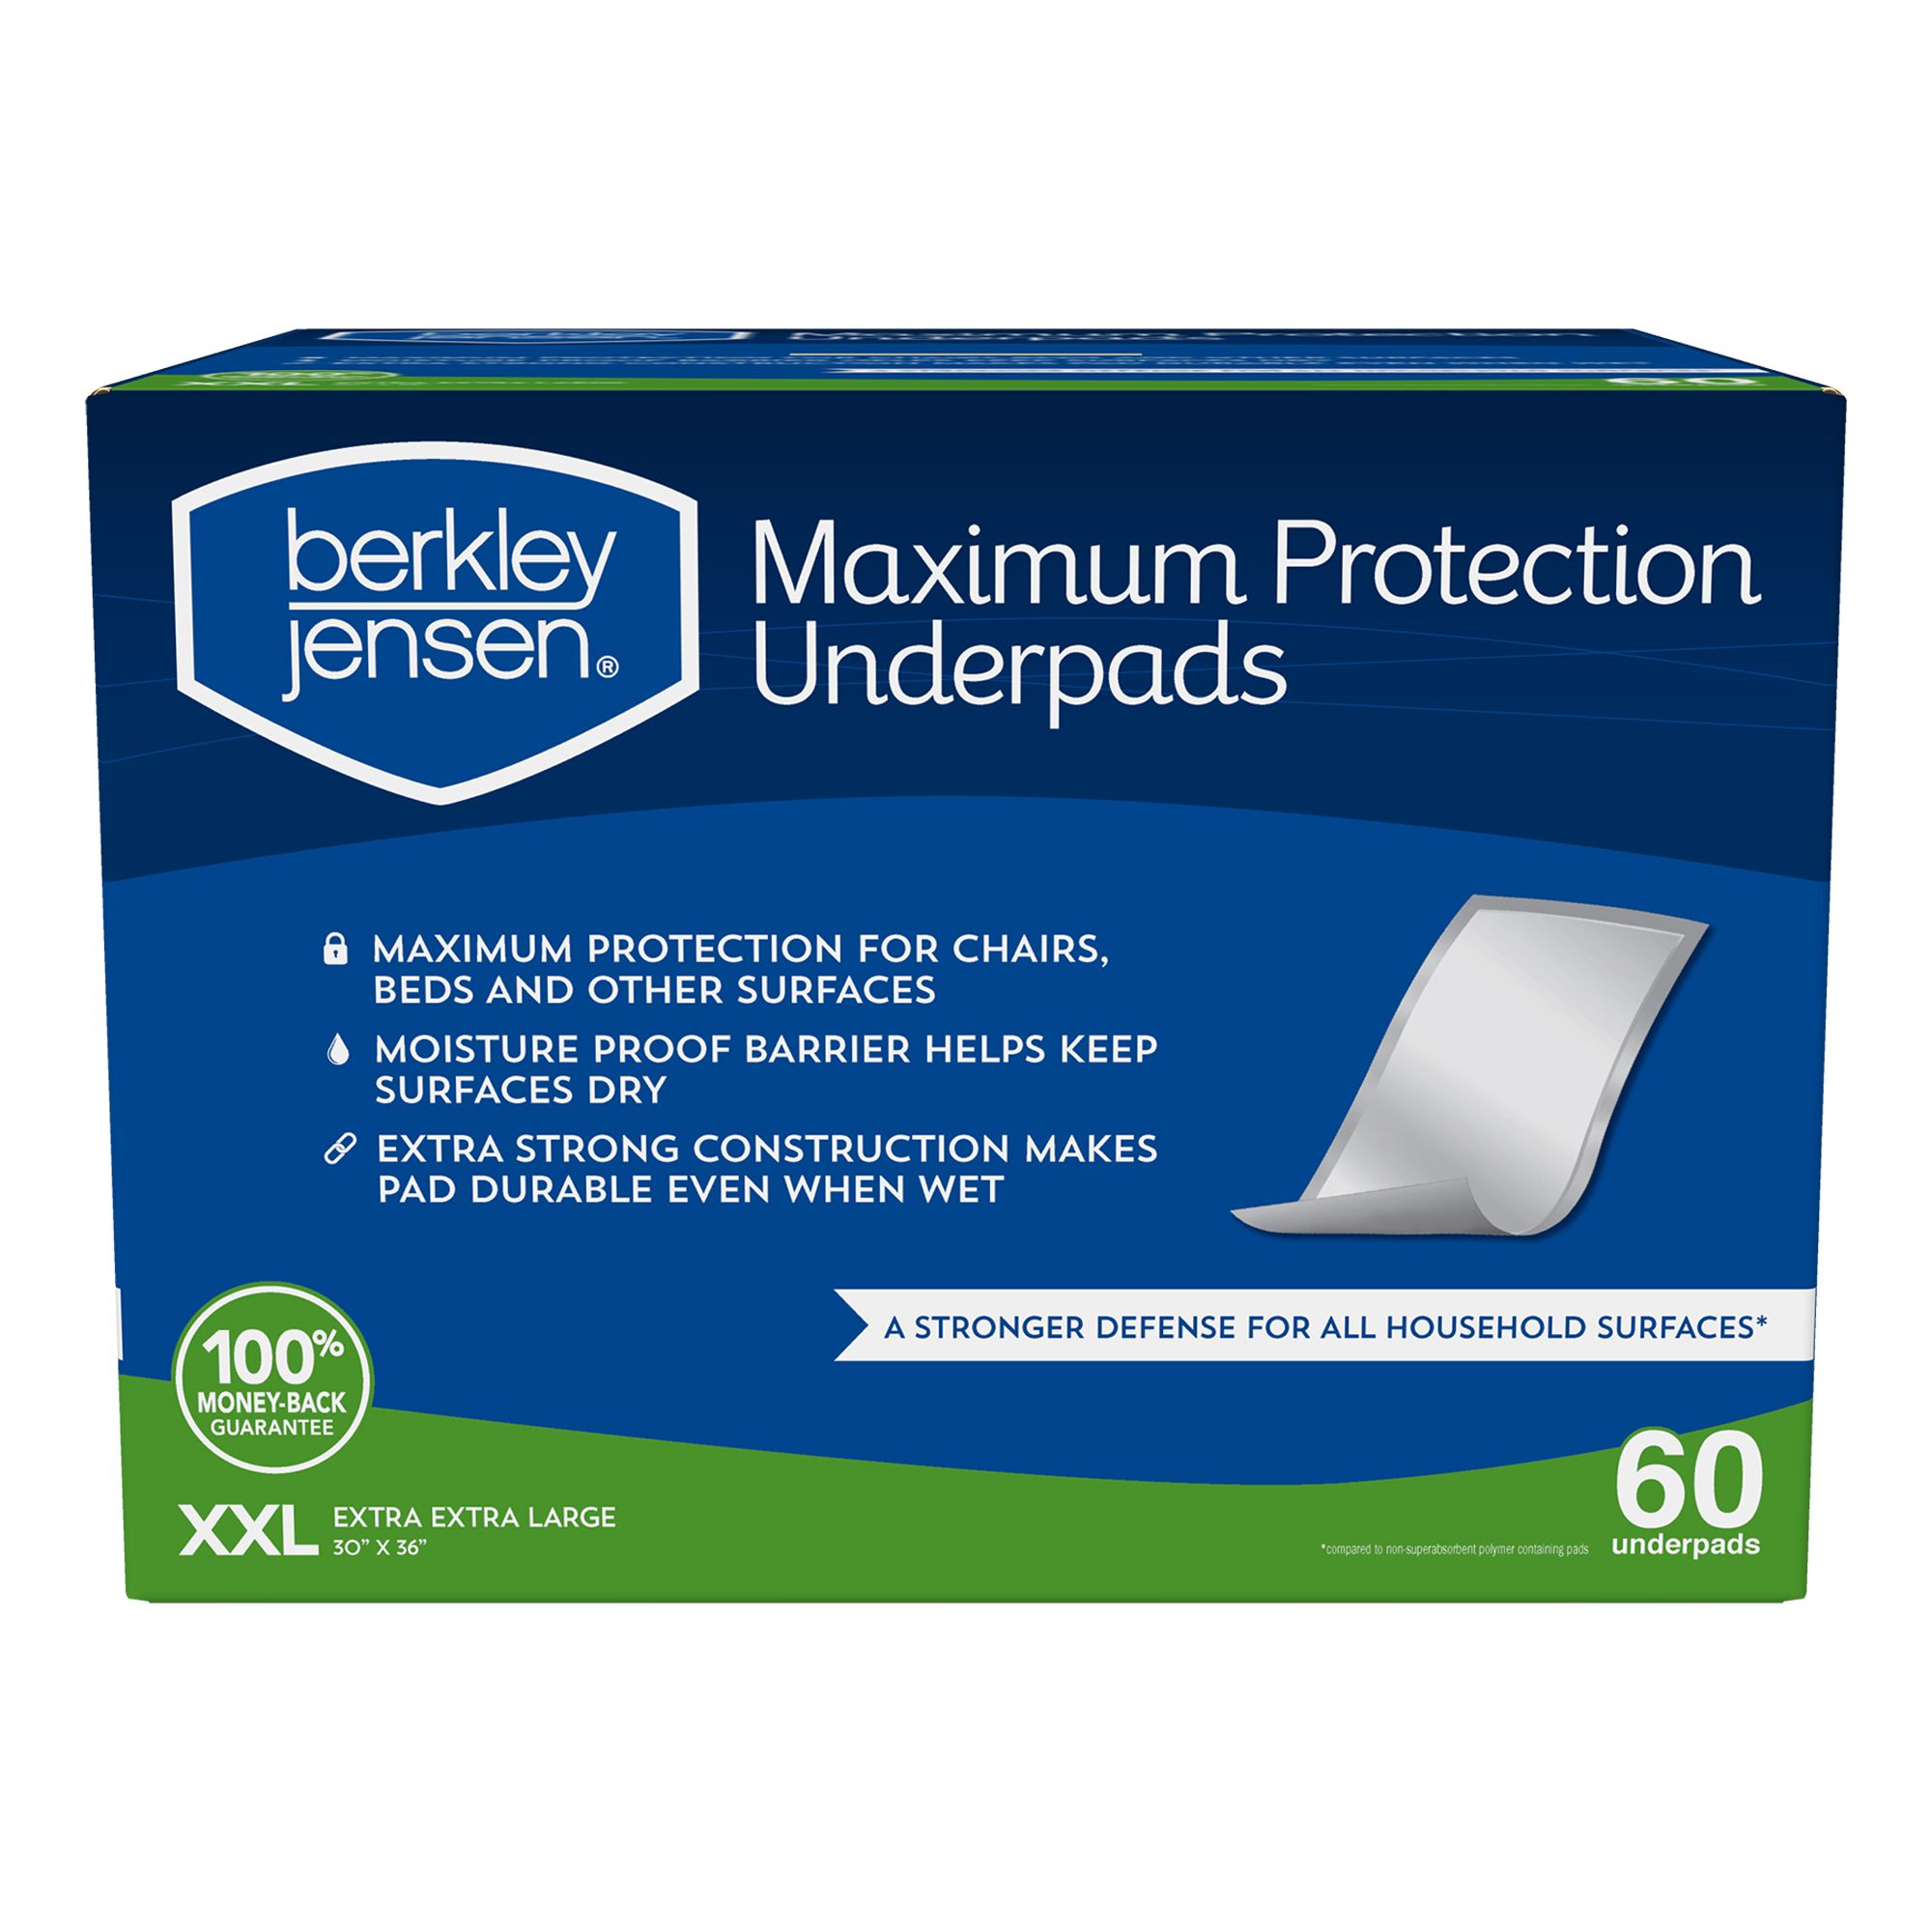 Berkley Jensen Maximum Protection XXL Underpads, 60 ct.